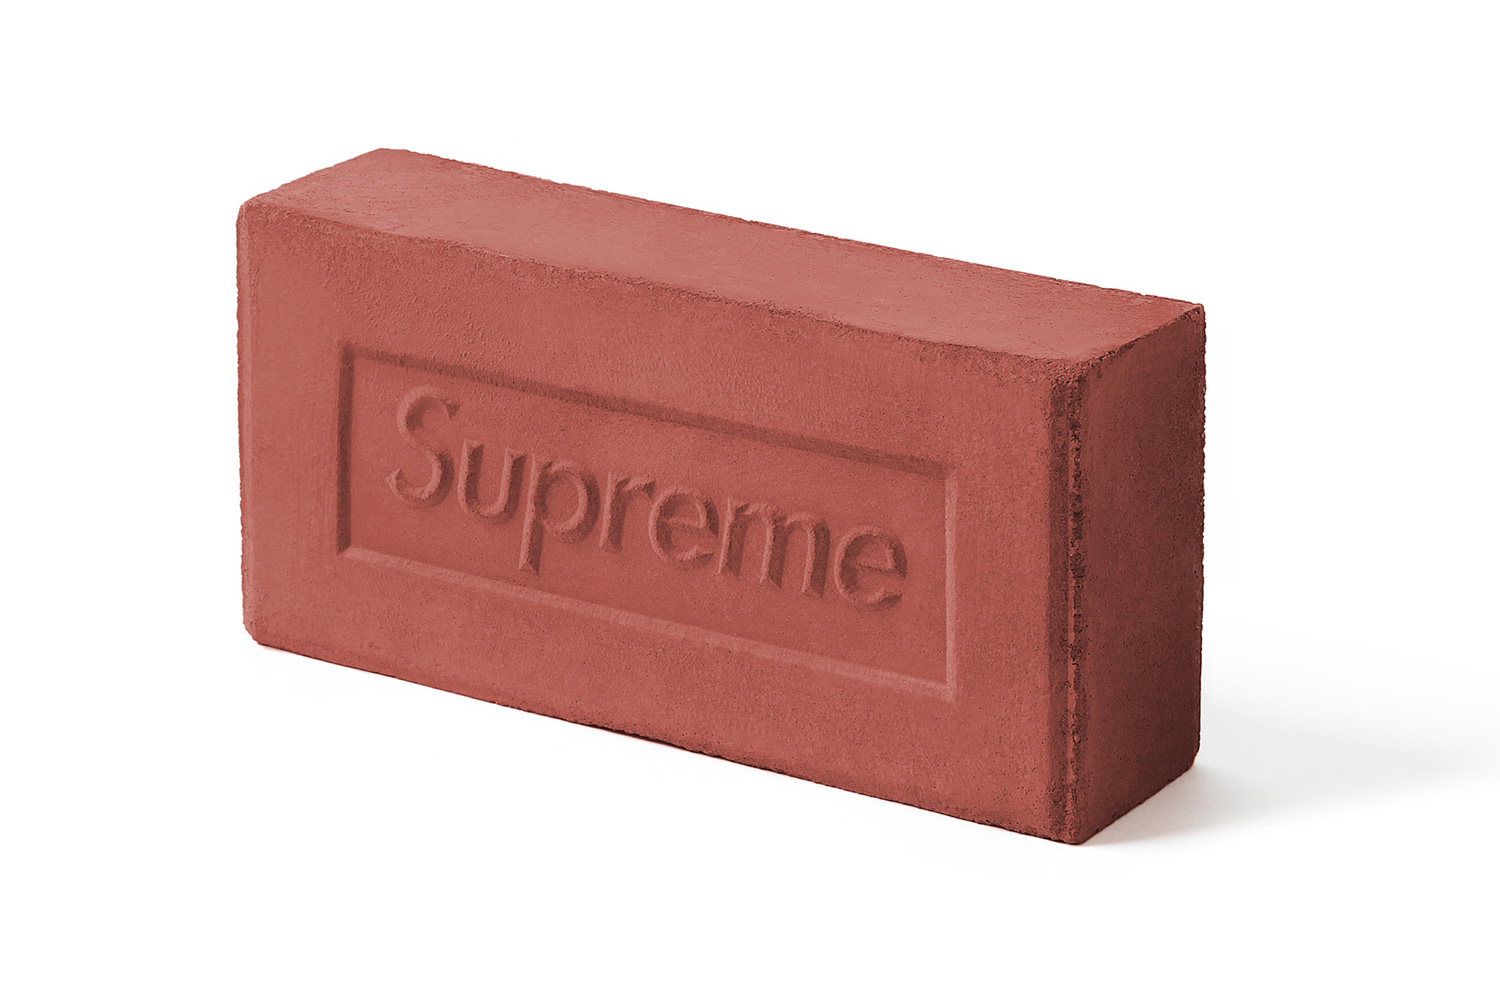 Supreme's Brick: 8 Reasons They Made It | Highsnobiety